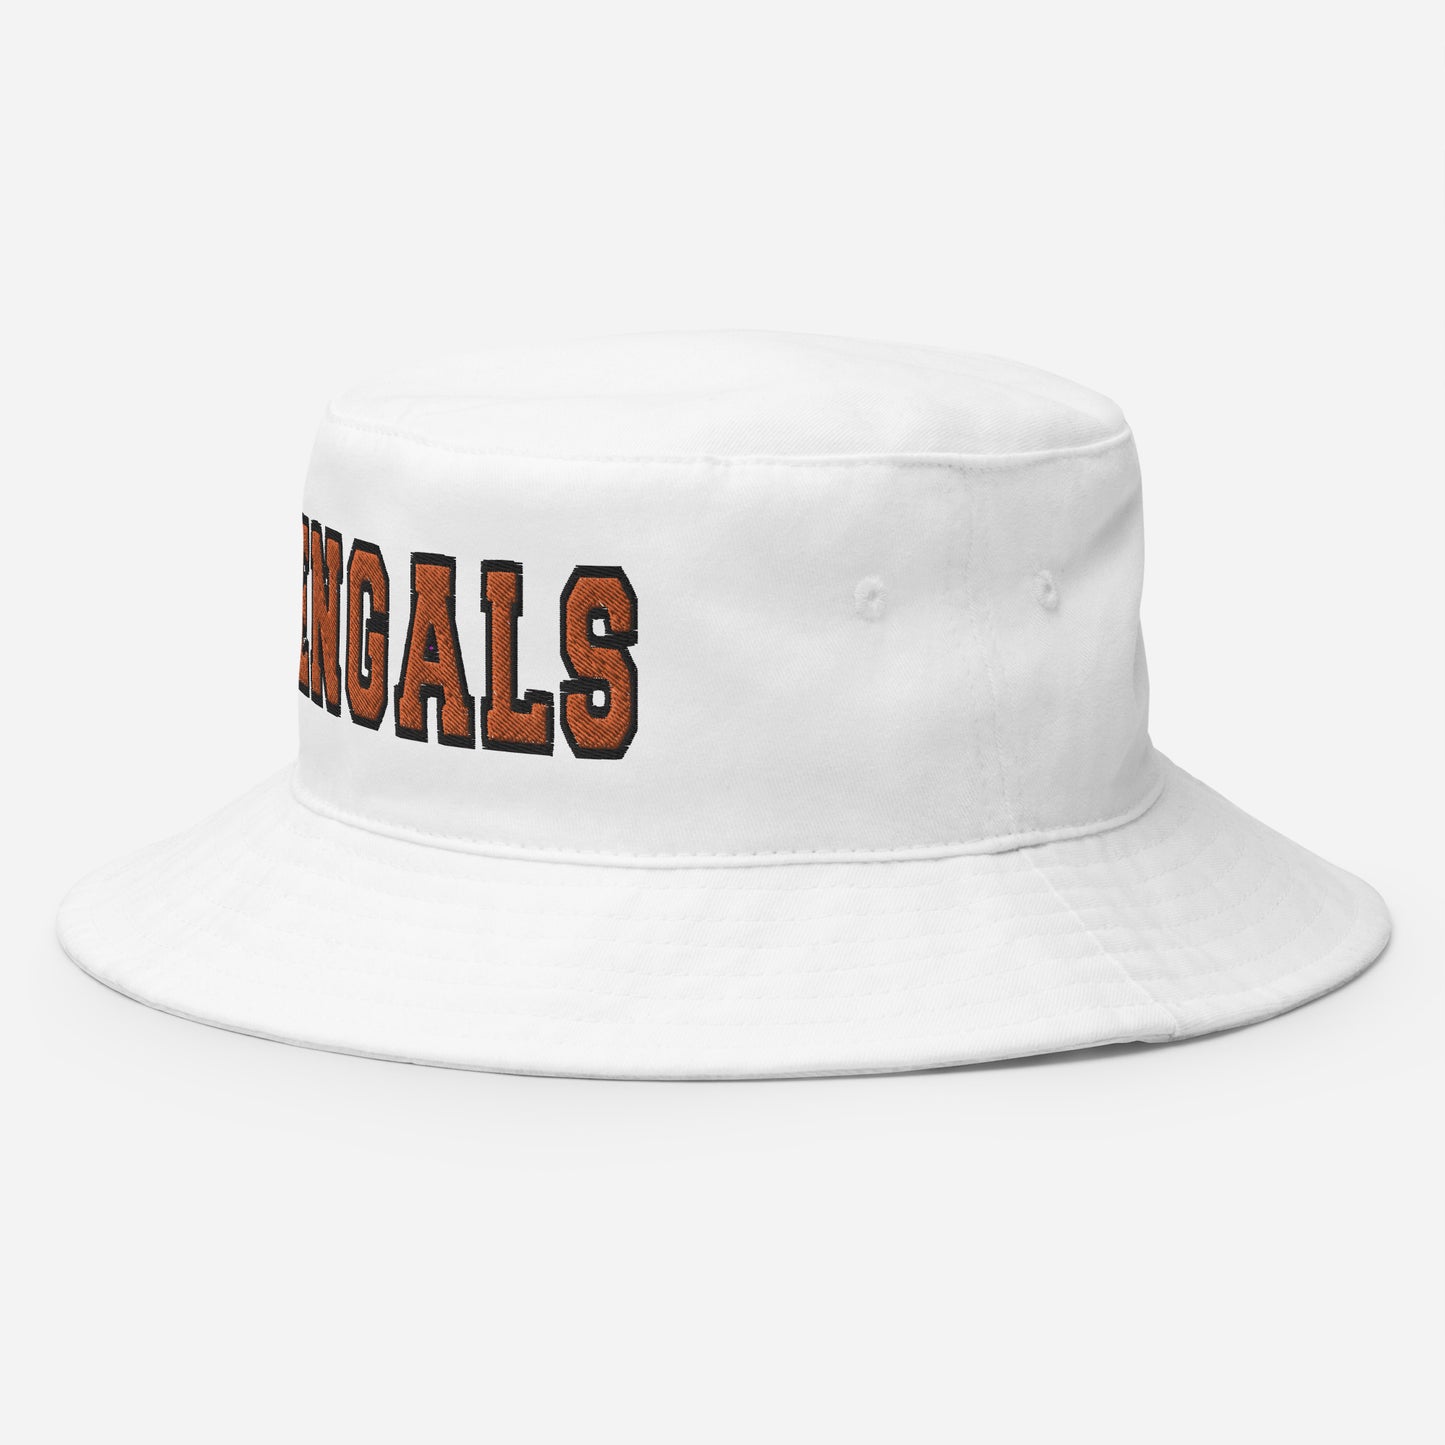 Cincinatti Bucket Hat Bengals Cap - Hialeah Hat Mart